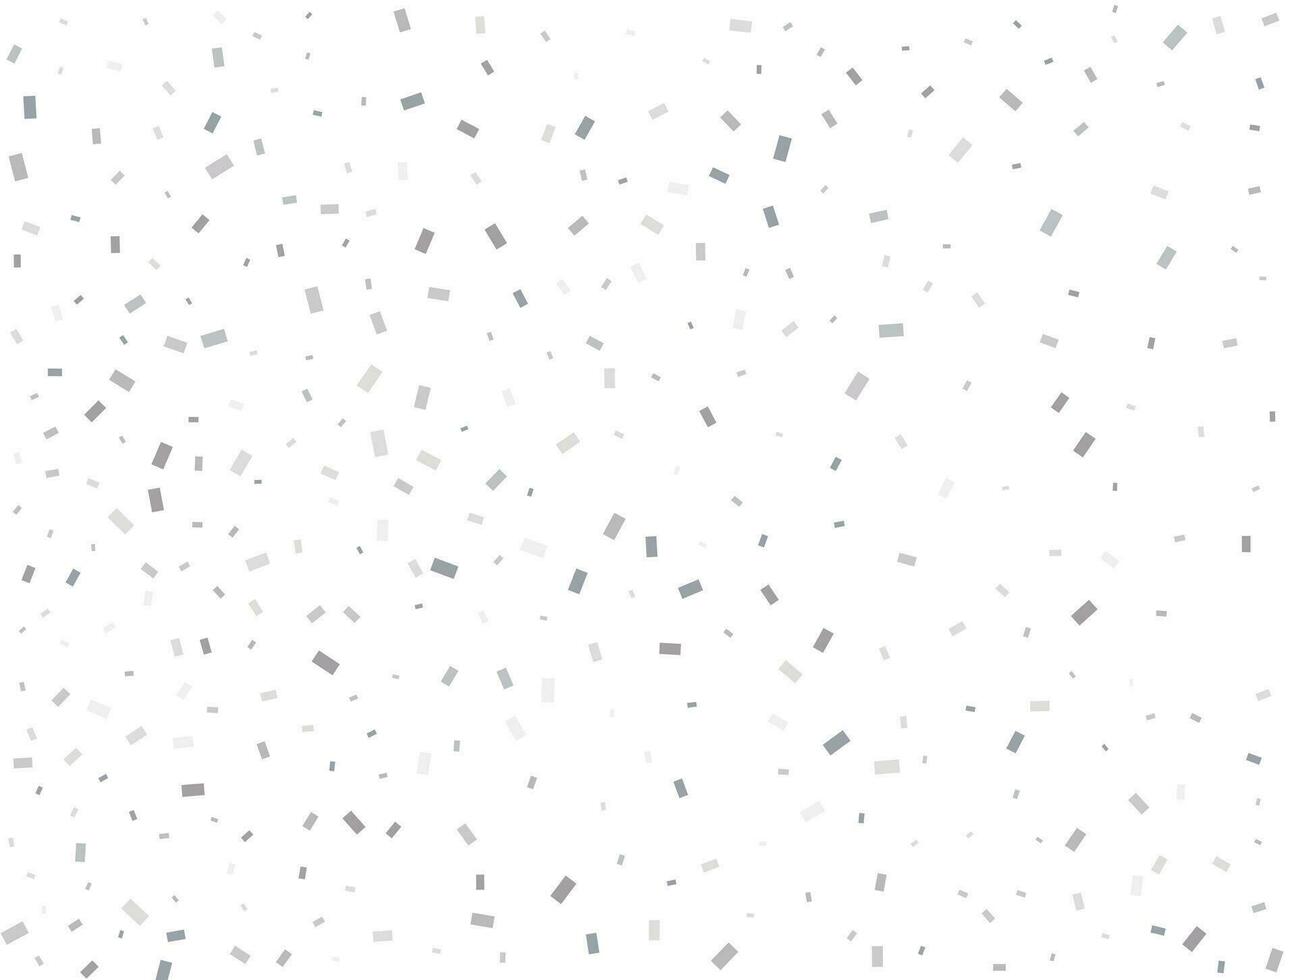 Luxury silver Rectangular glitter confetti background. White festive texture. vector